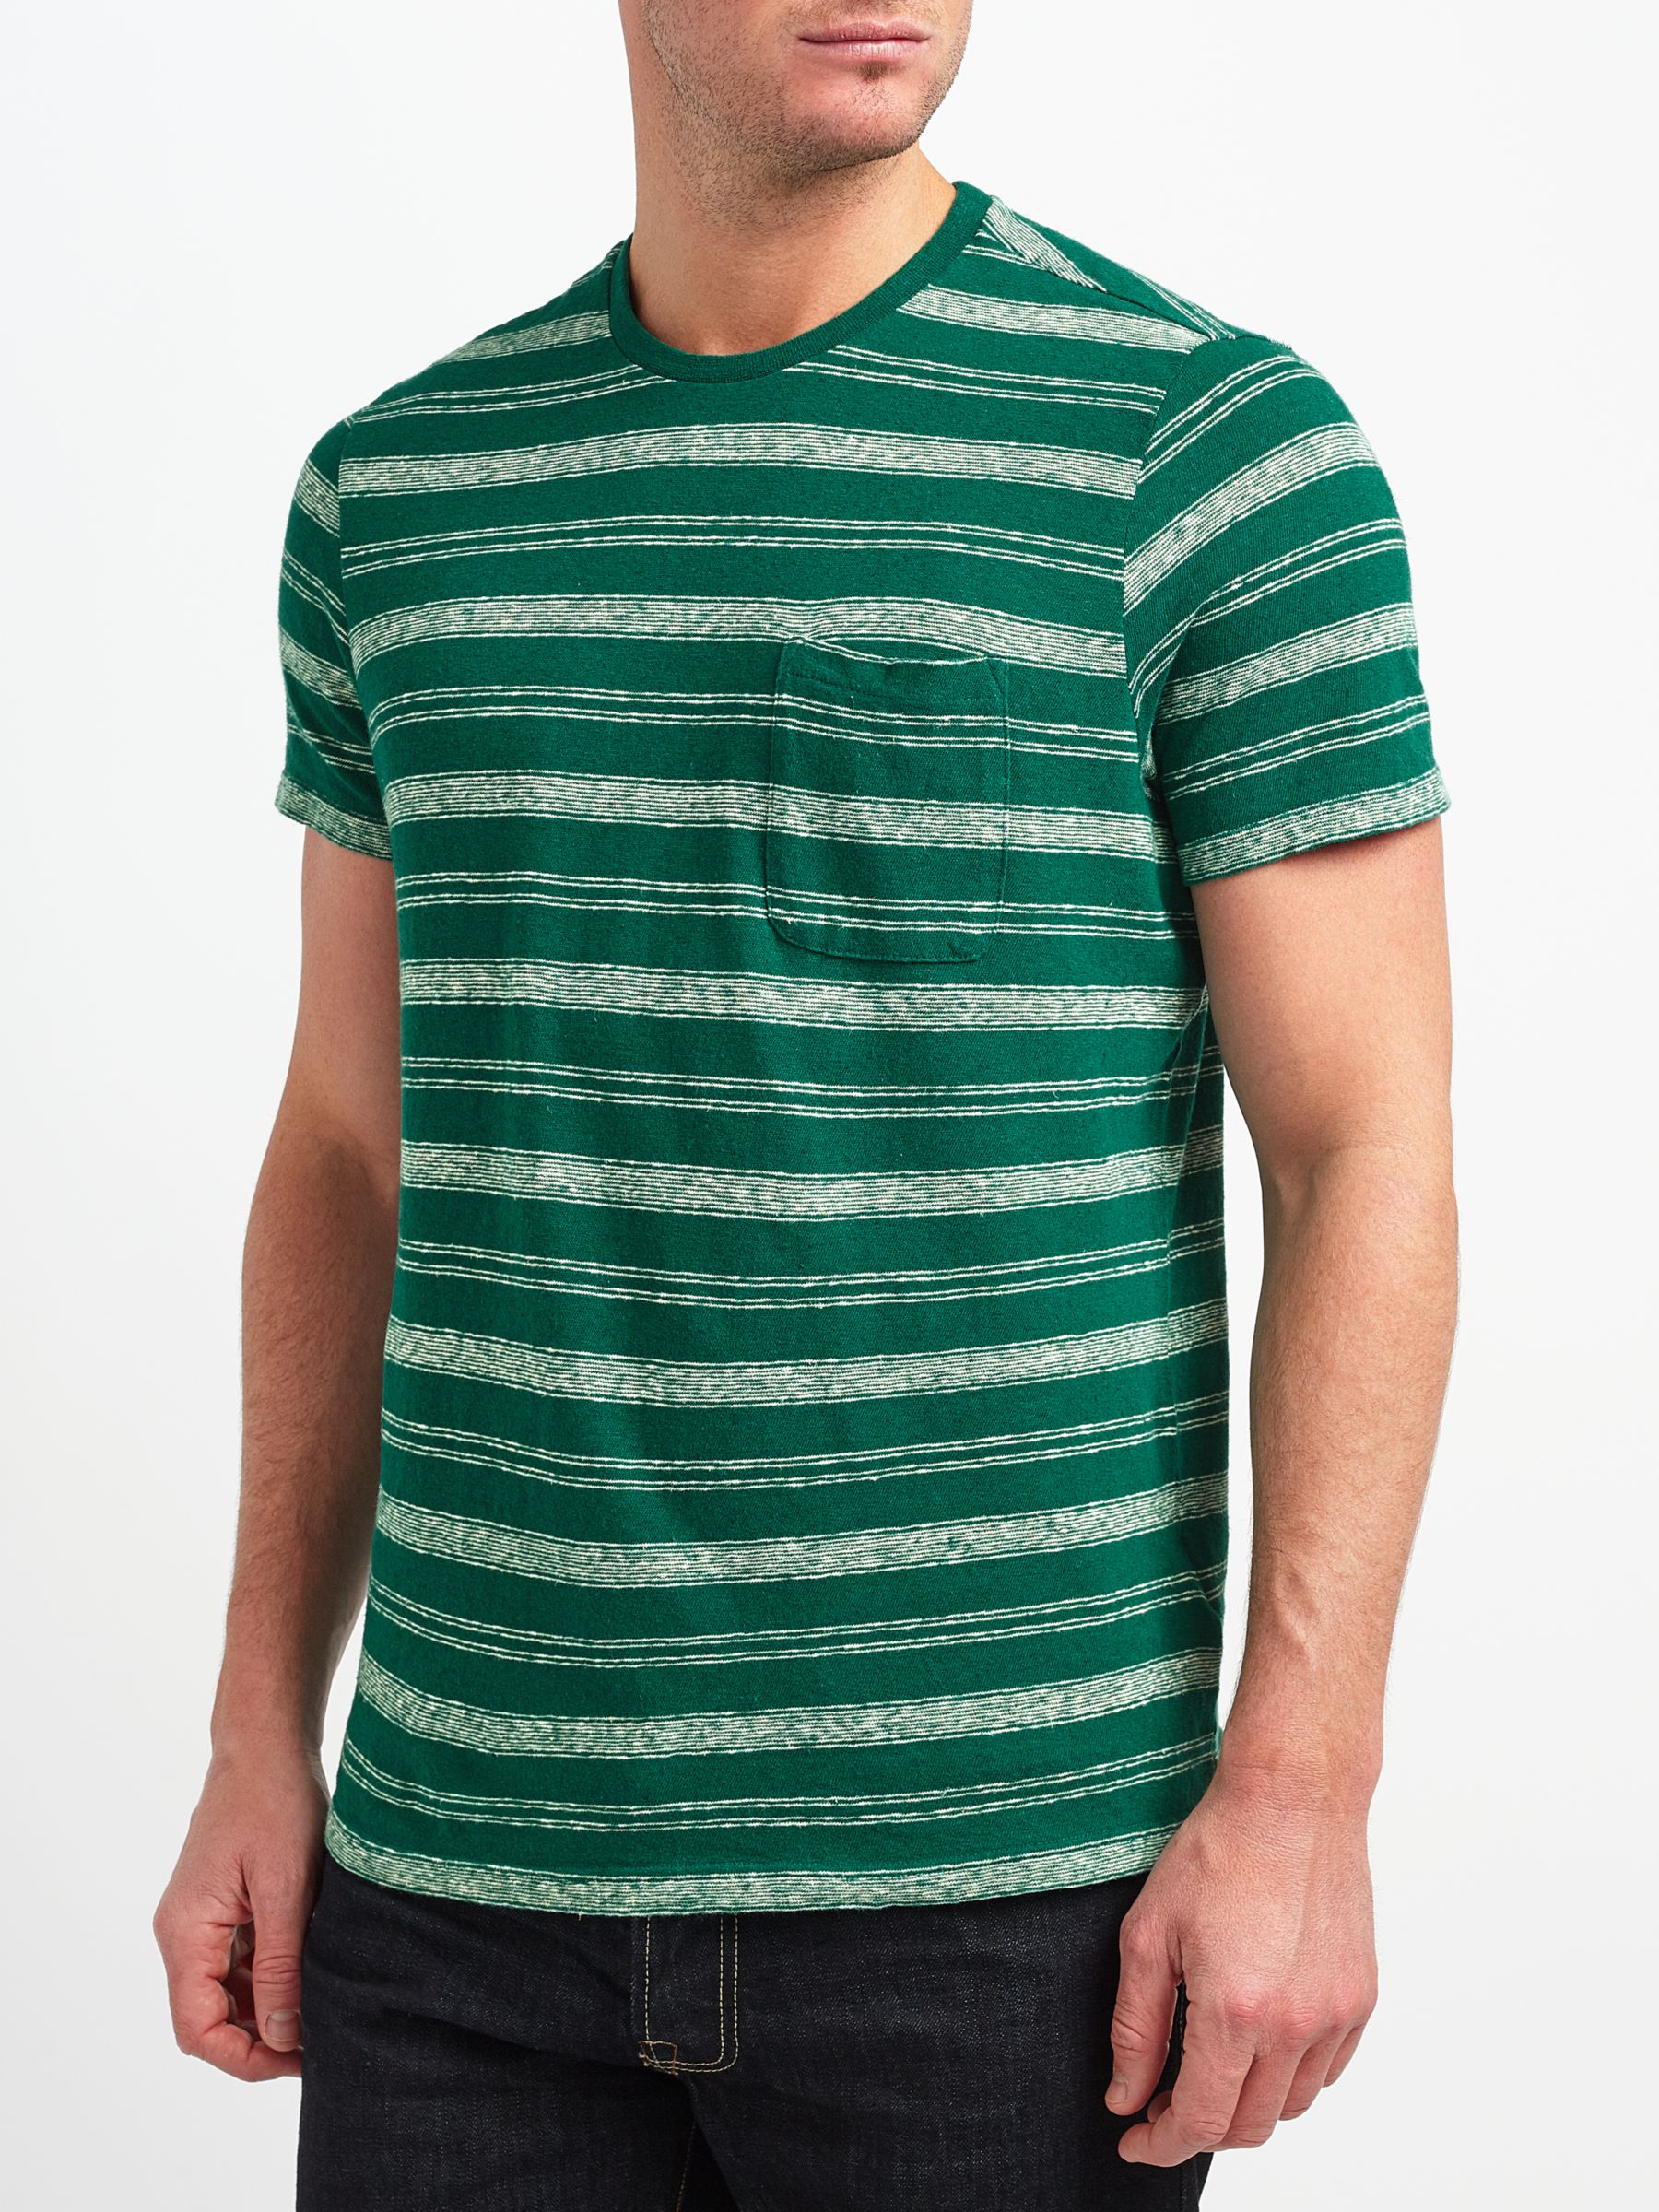 JOHN LEWIS & Co. Cotton Linen Stripe T-Shirt, Green, XXL